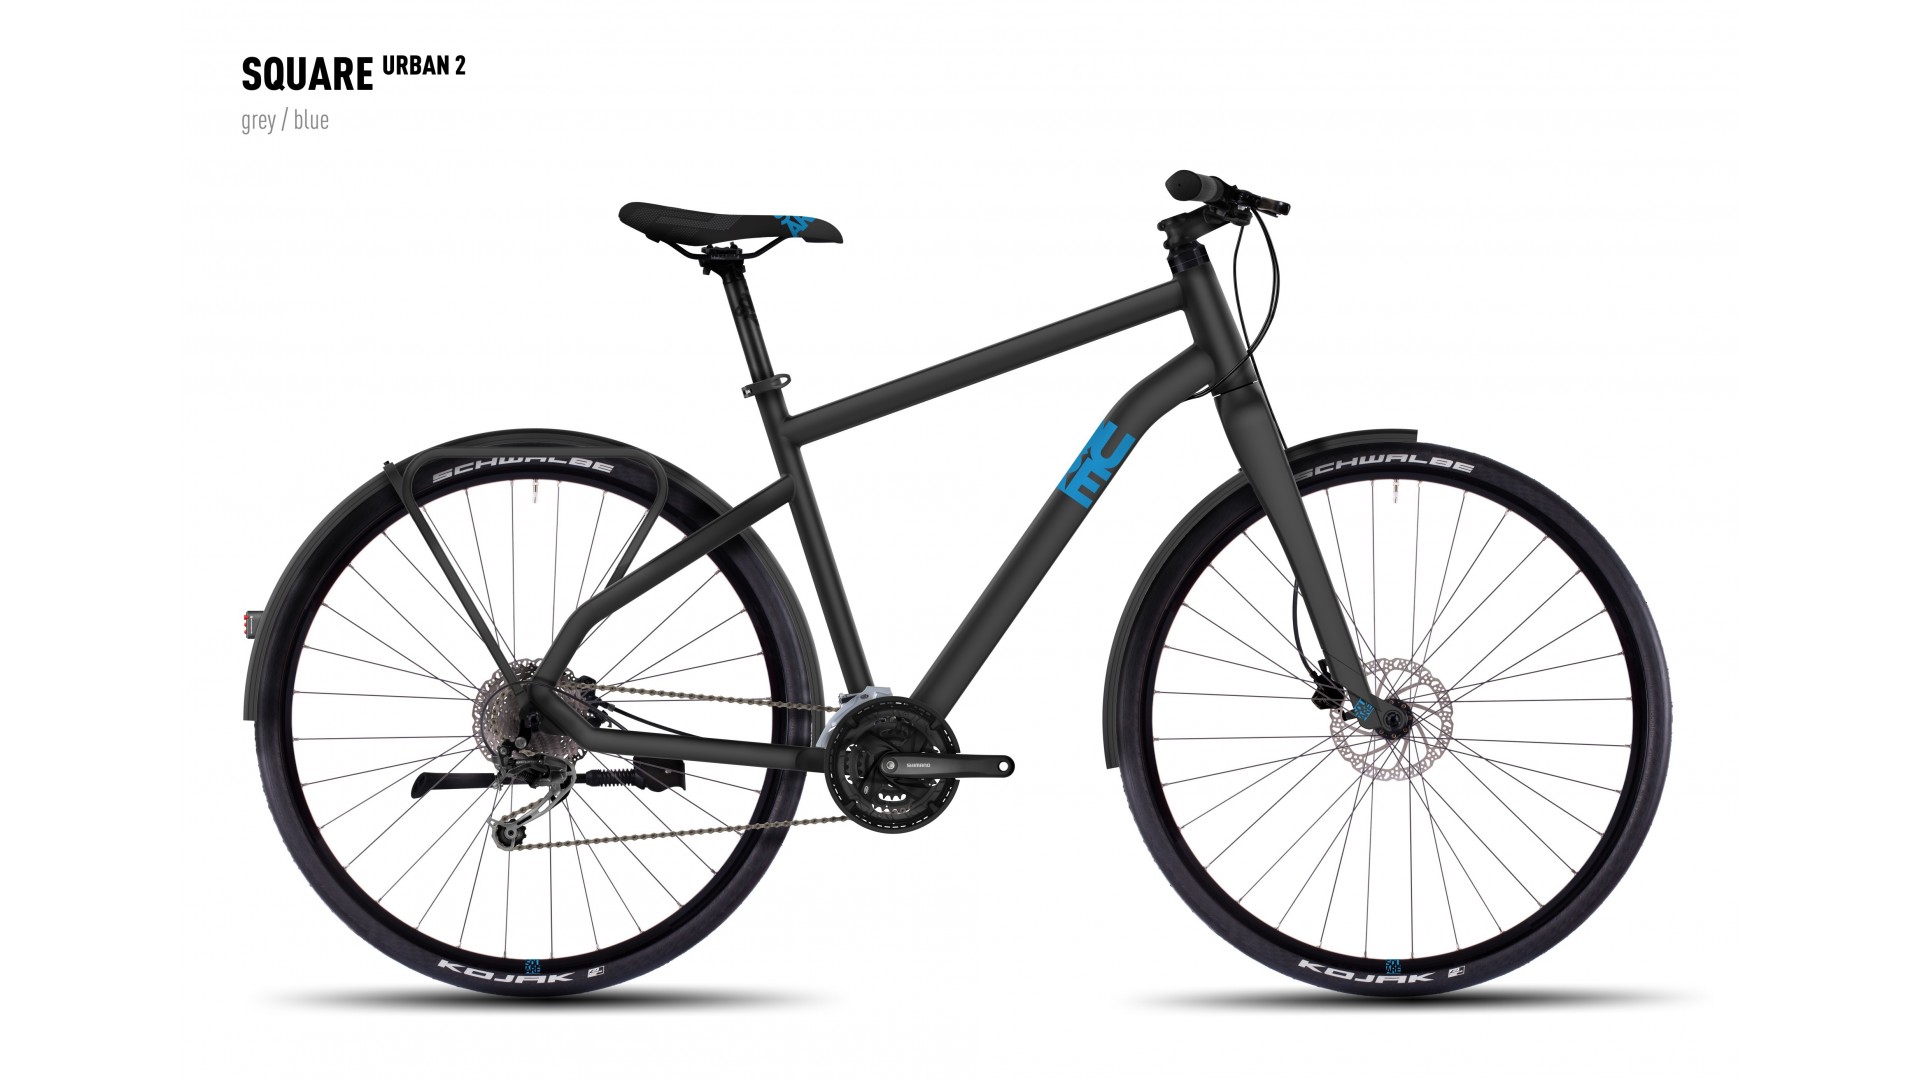 Велосипед GHOST Square Urban 2 grey/blue год 2016